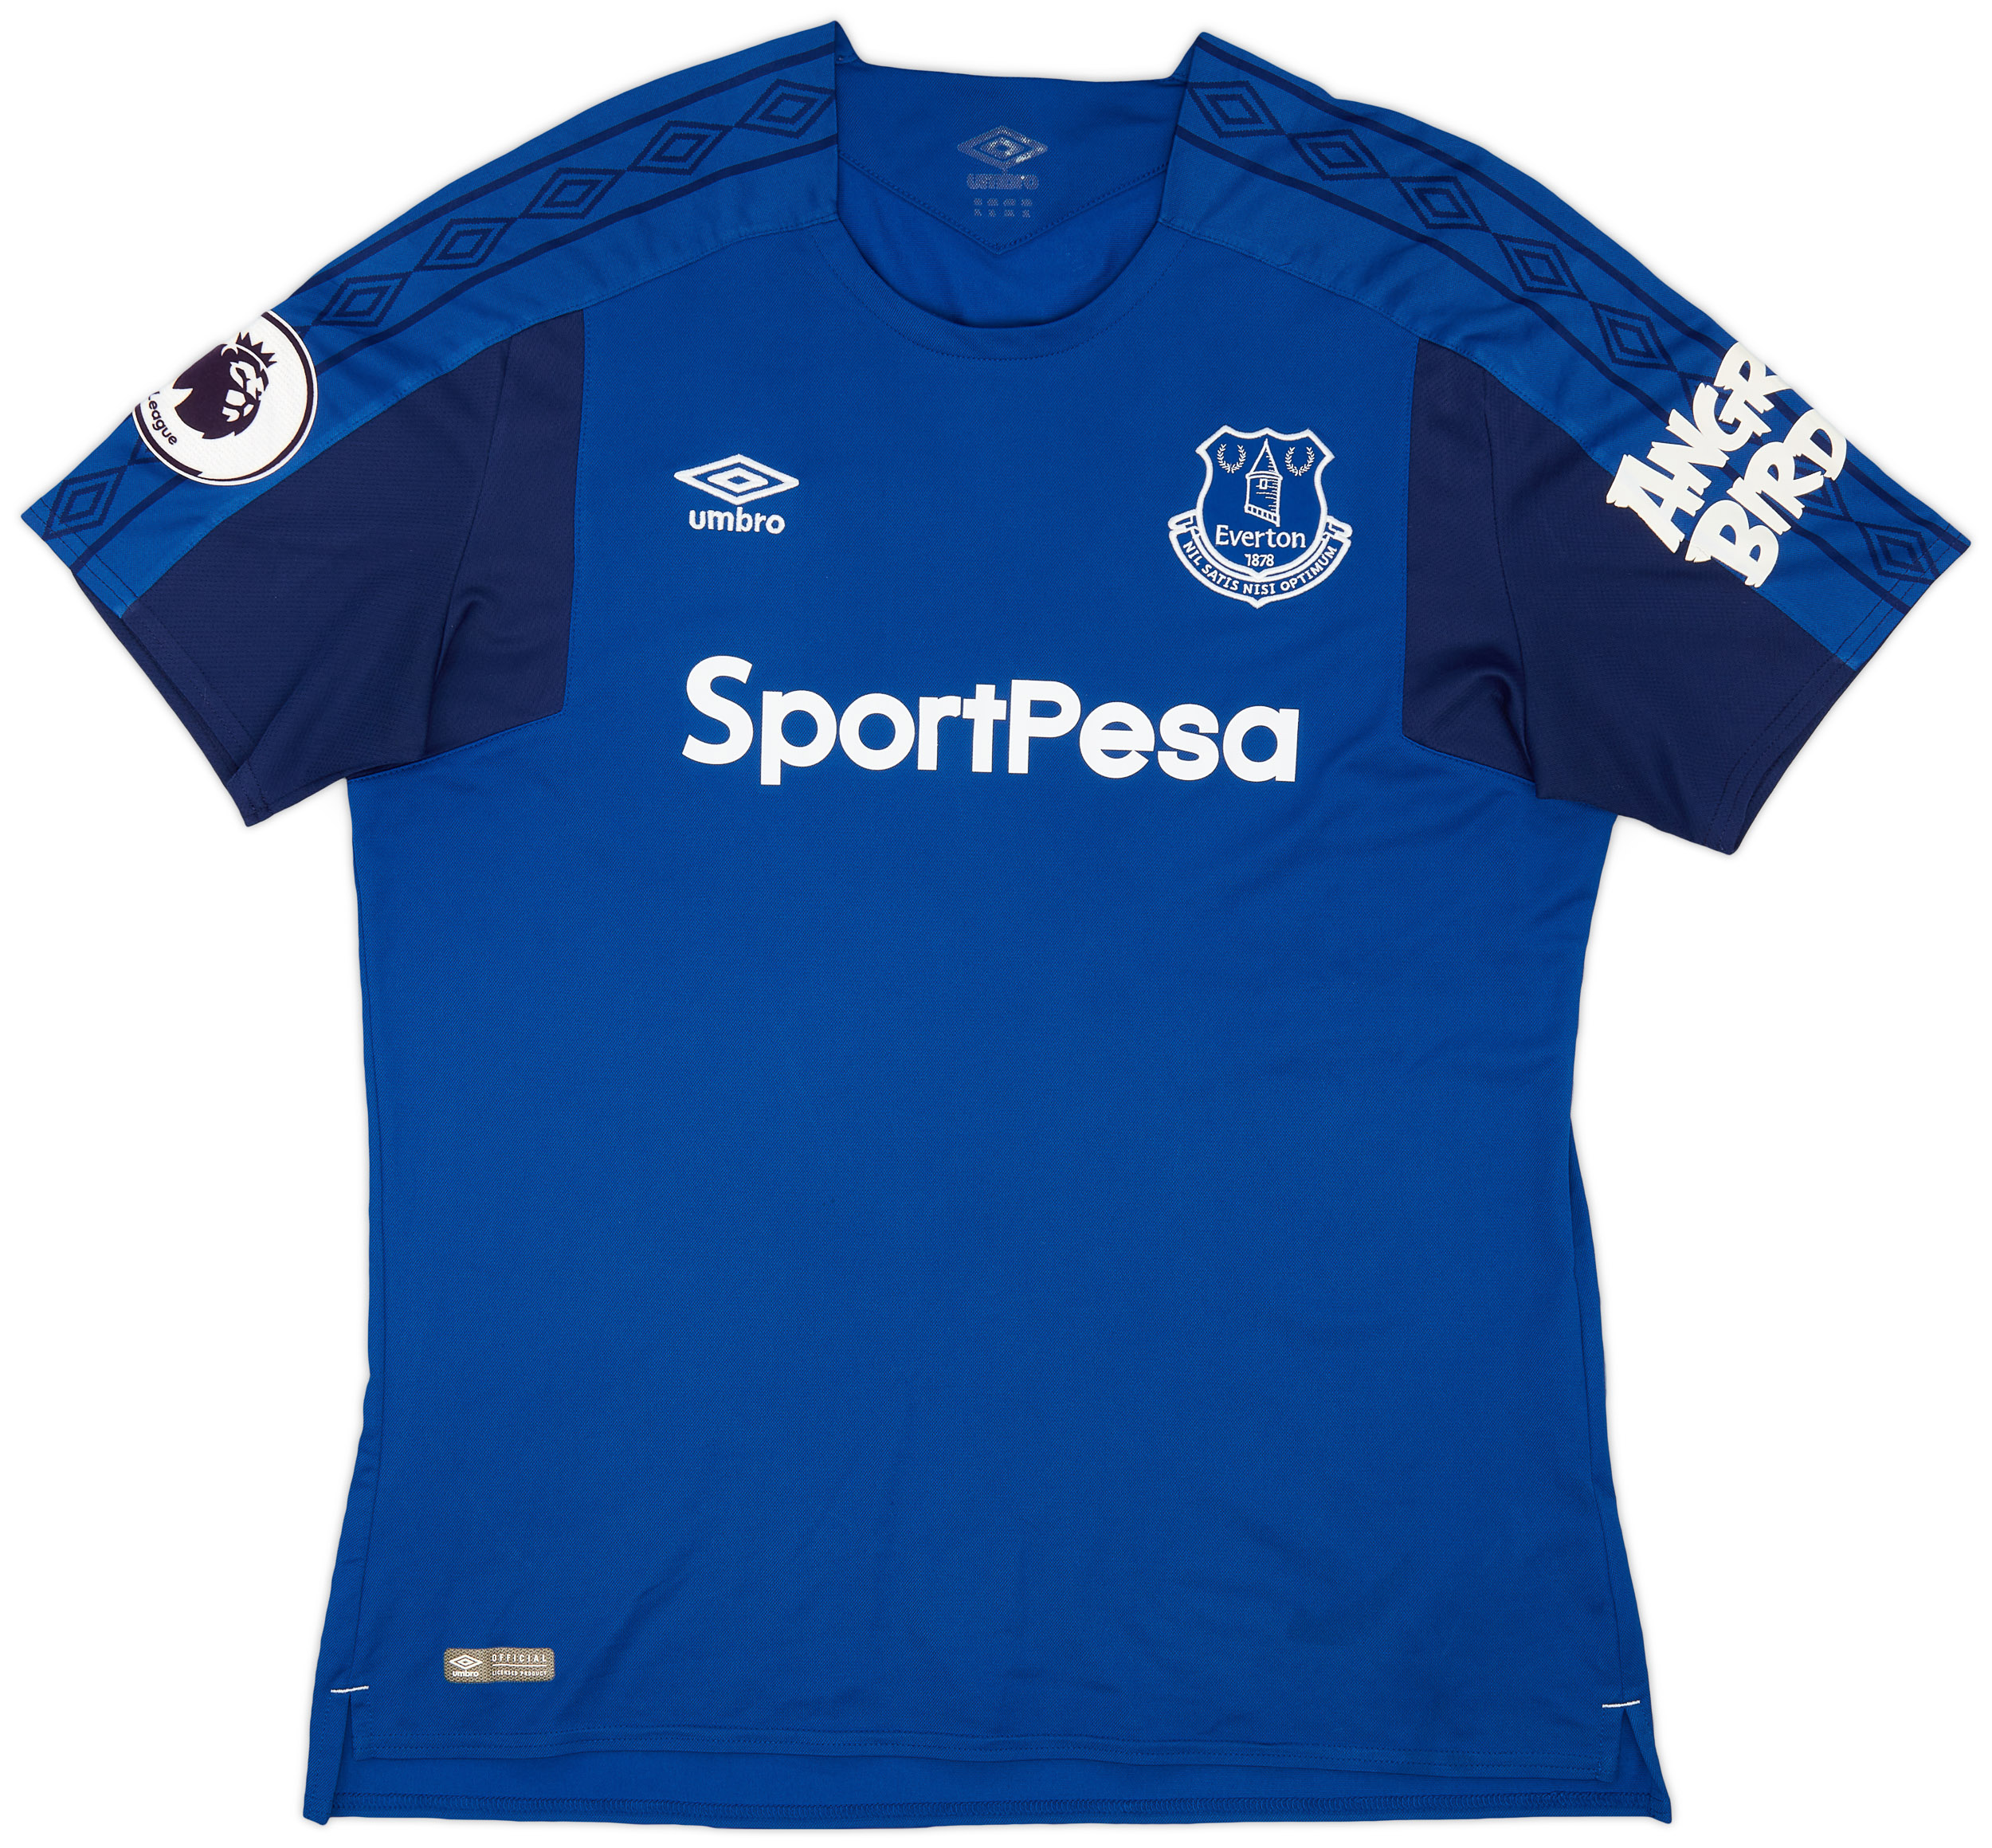 2017-18 Everton Home Shirt - 7/10 - ()